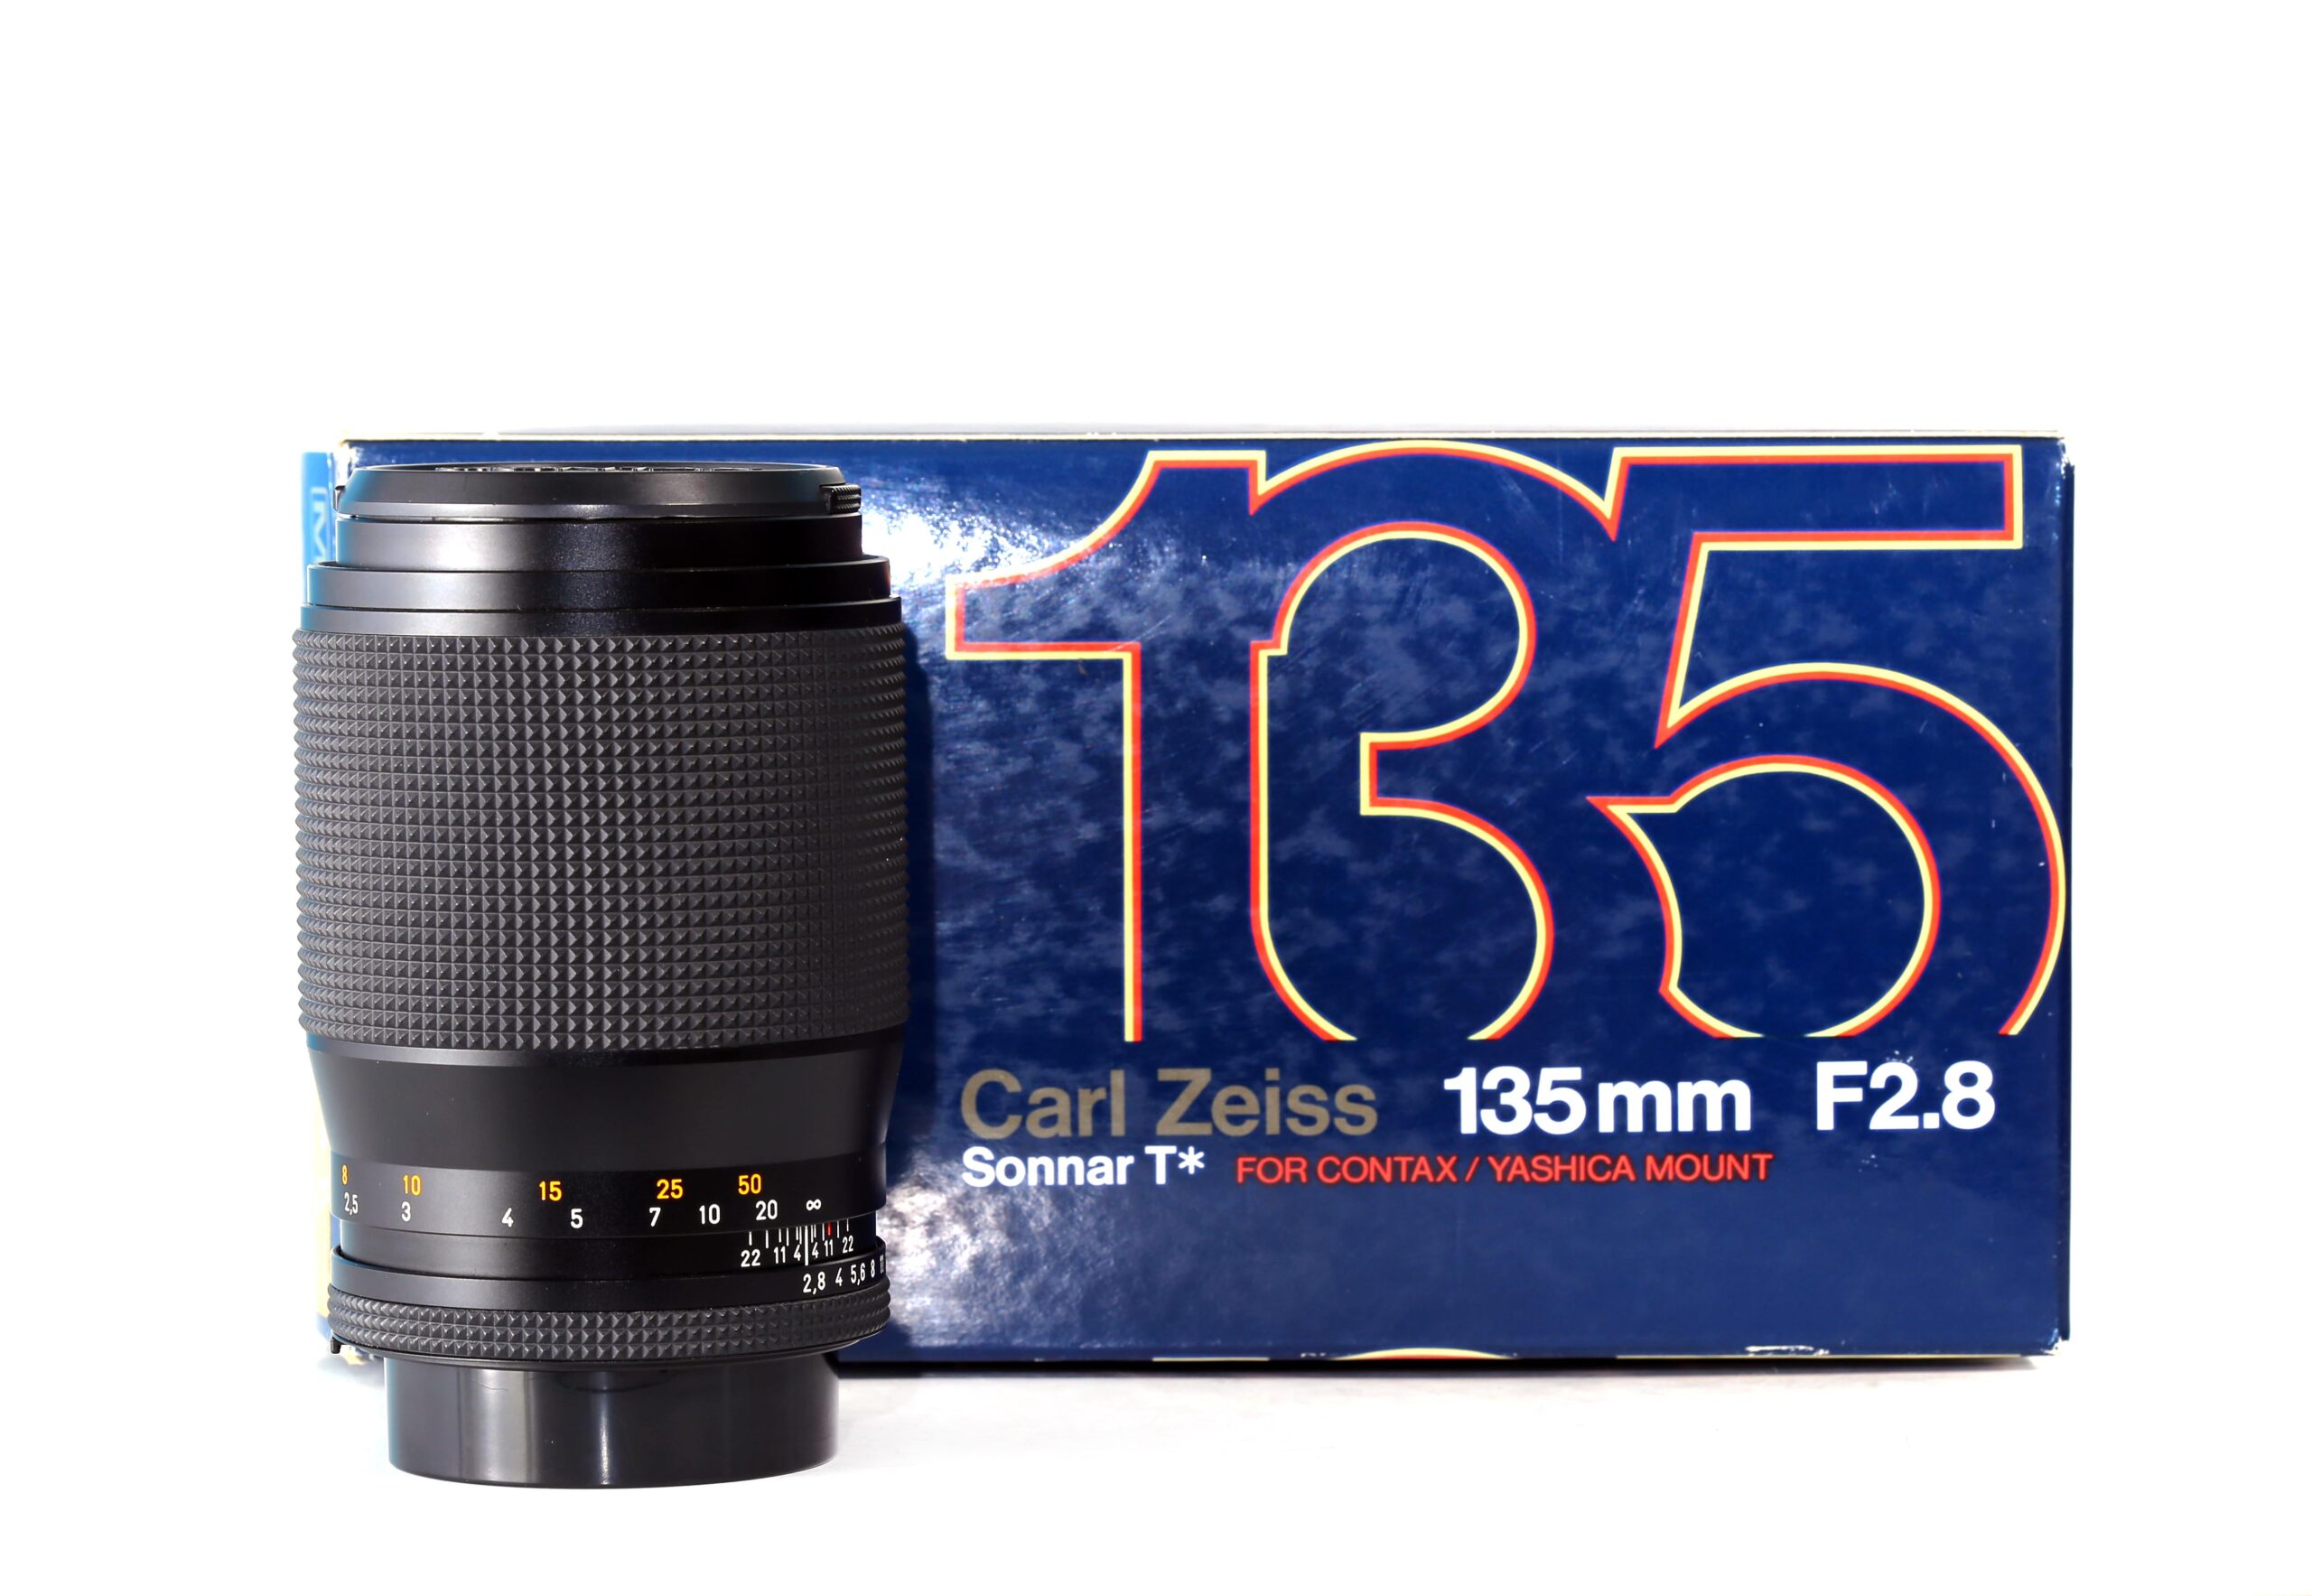 CONTAX Carl Zeiss Sonnar 135mm F2.8撮影には影響のないレベルです